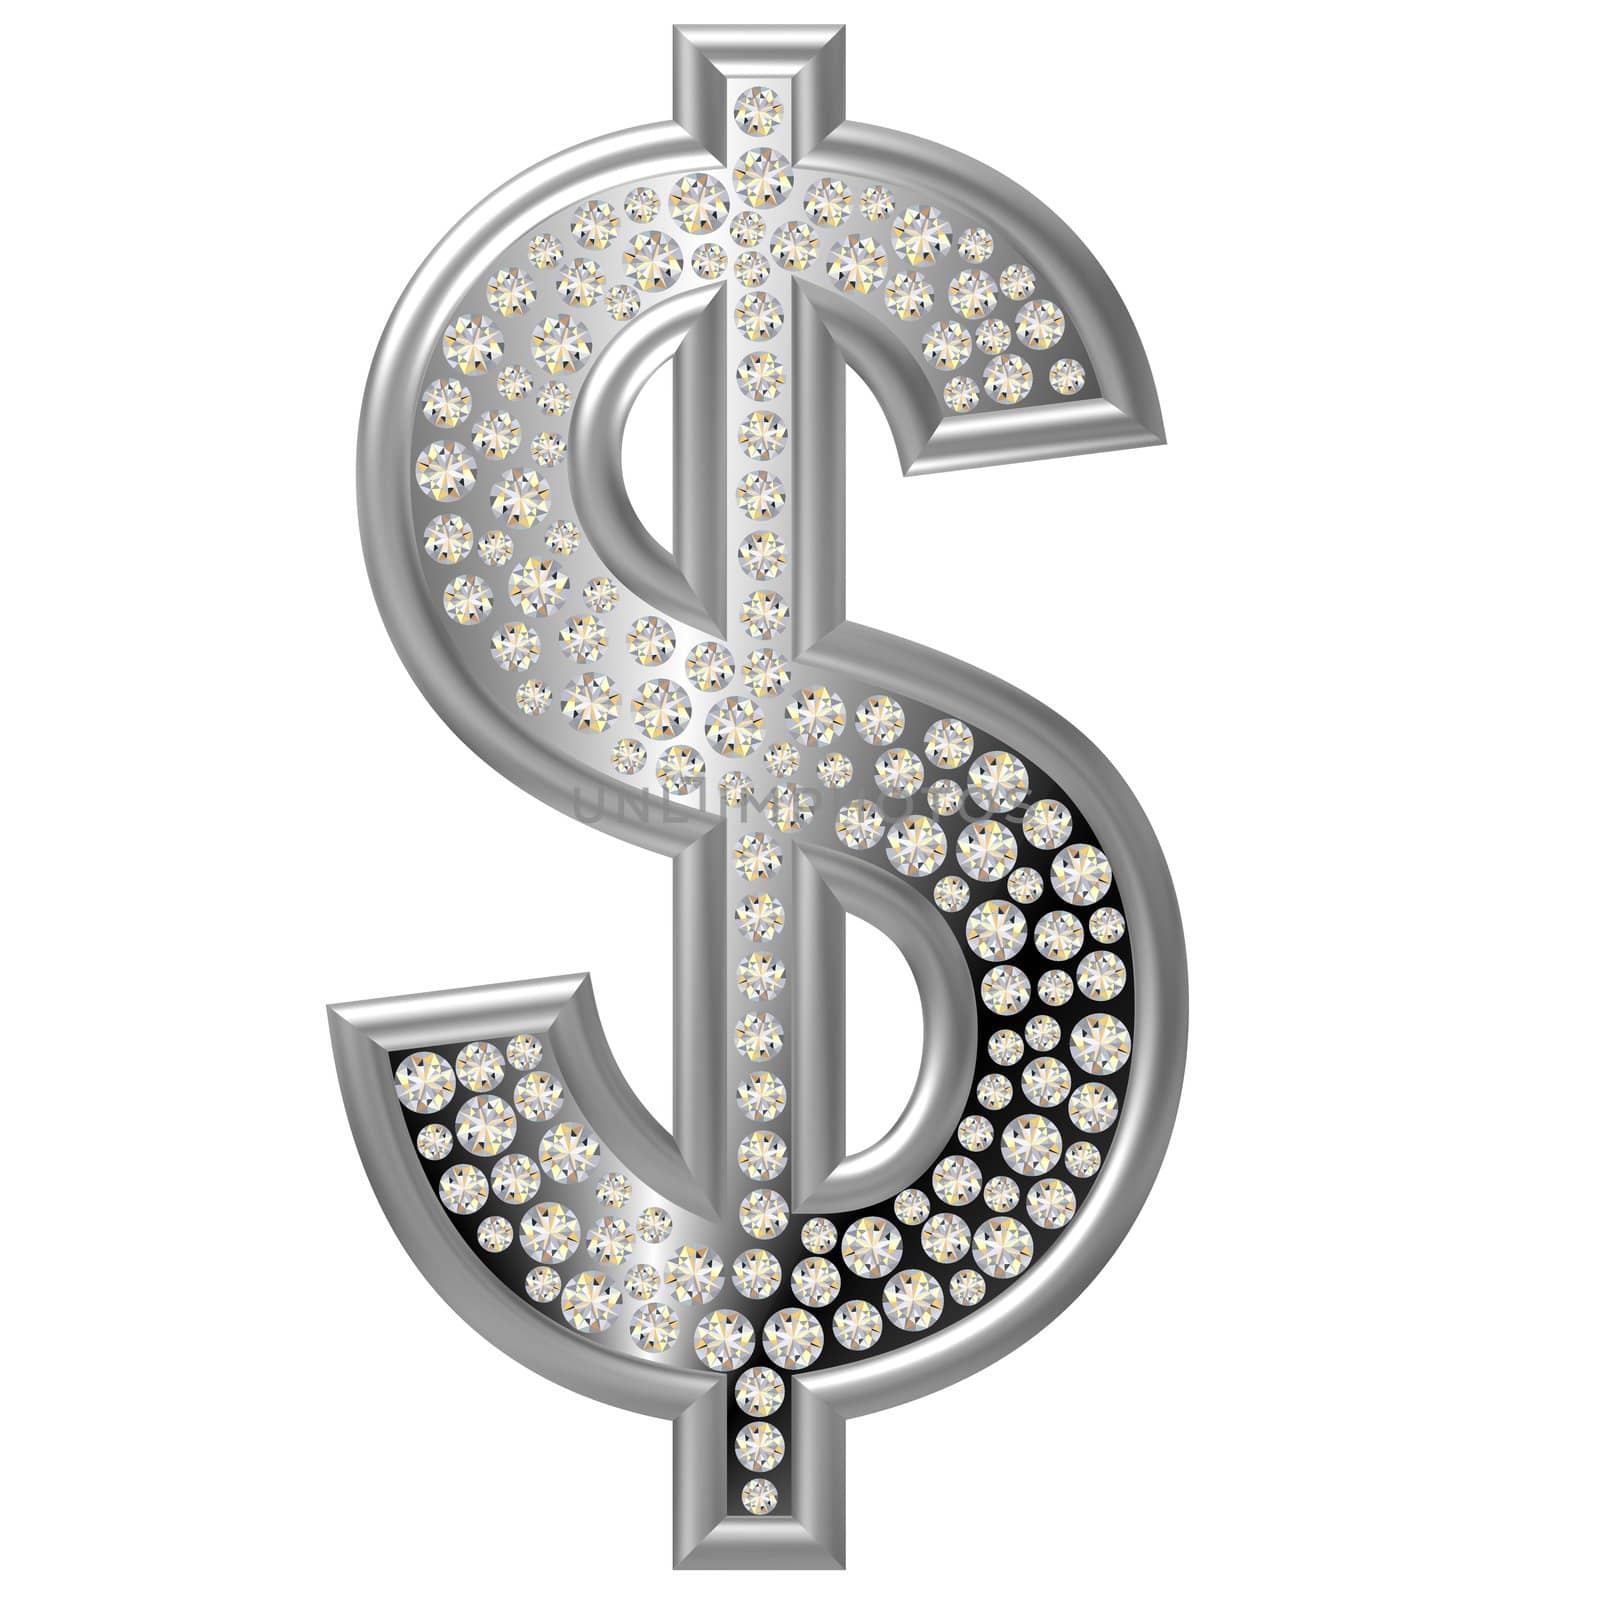 Diamond Symbol Dollar by peromarketing